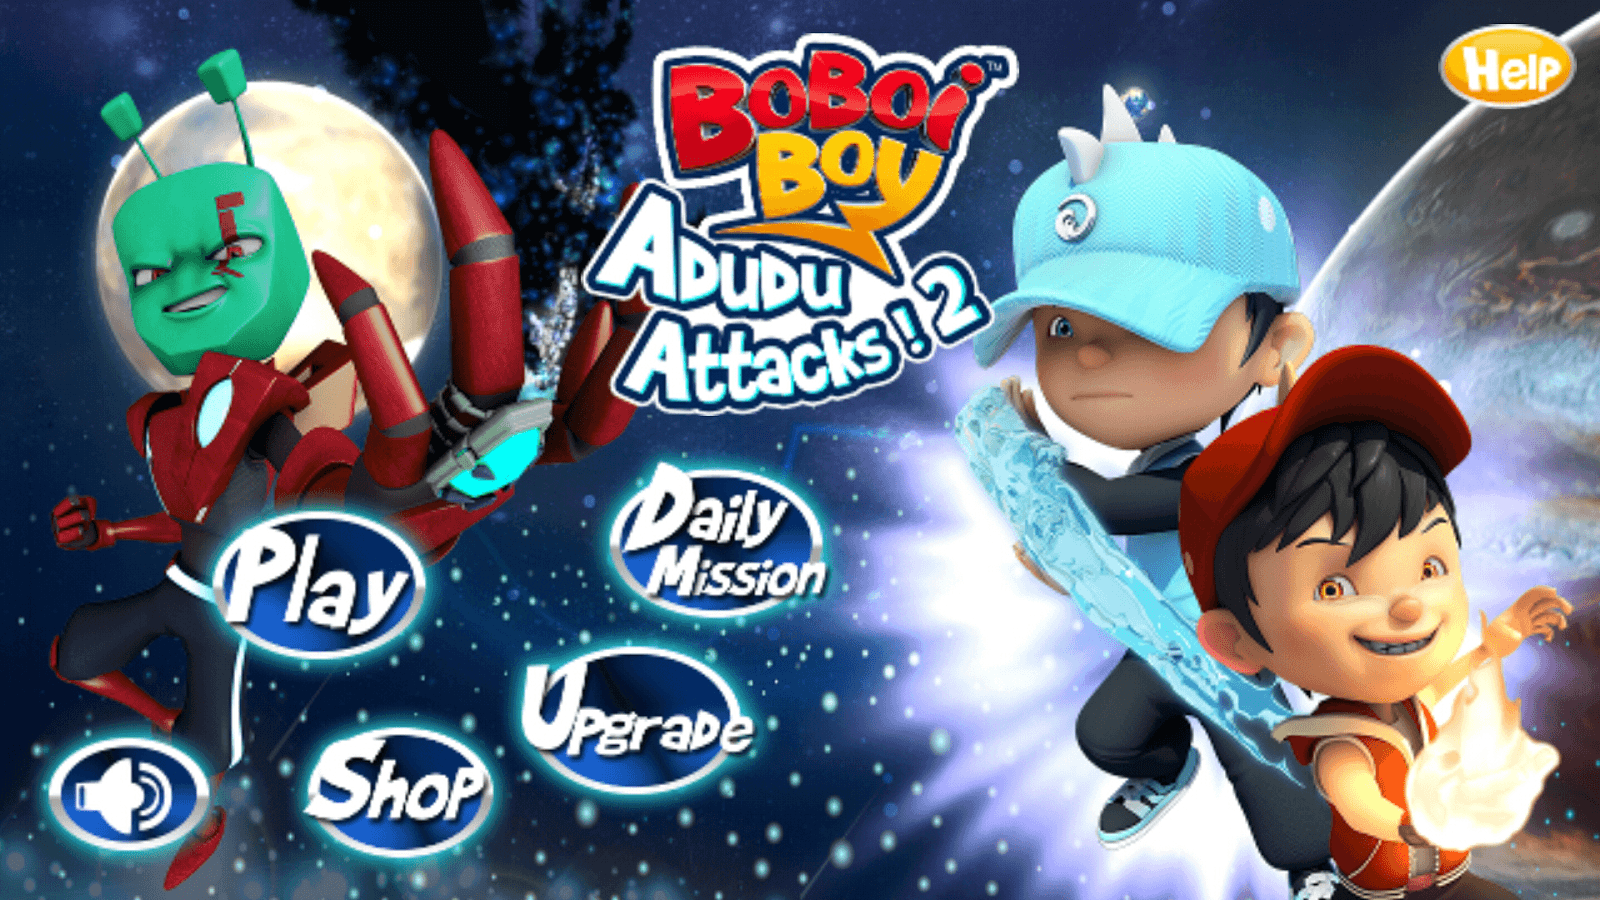 Download BoBoiBoy: Adudu Attacks! 2 App for Free: Install Latest